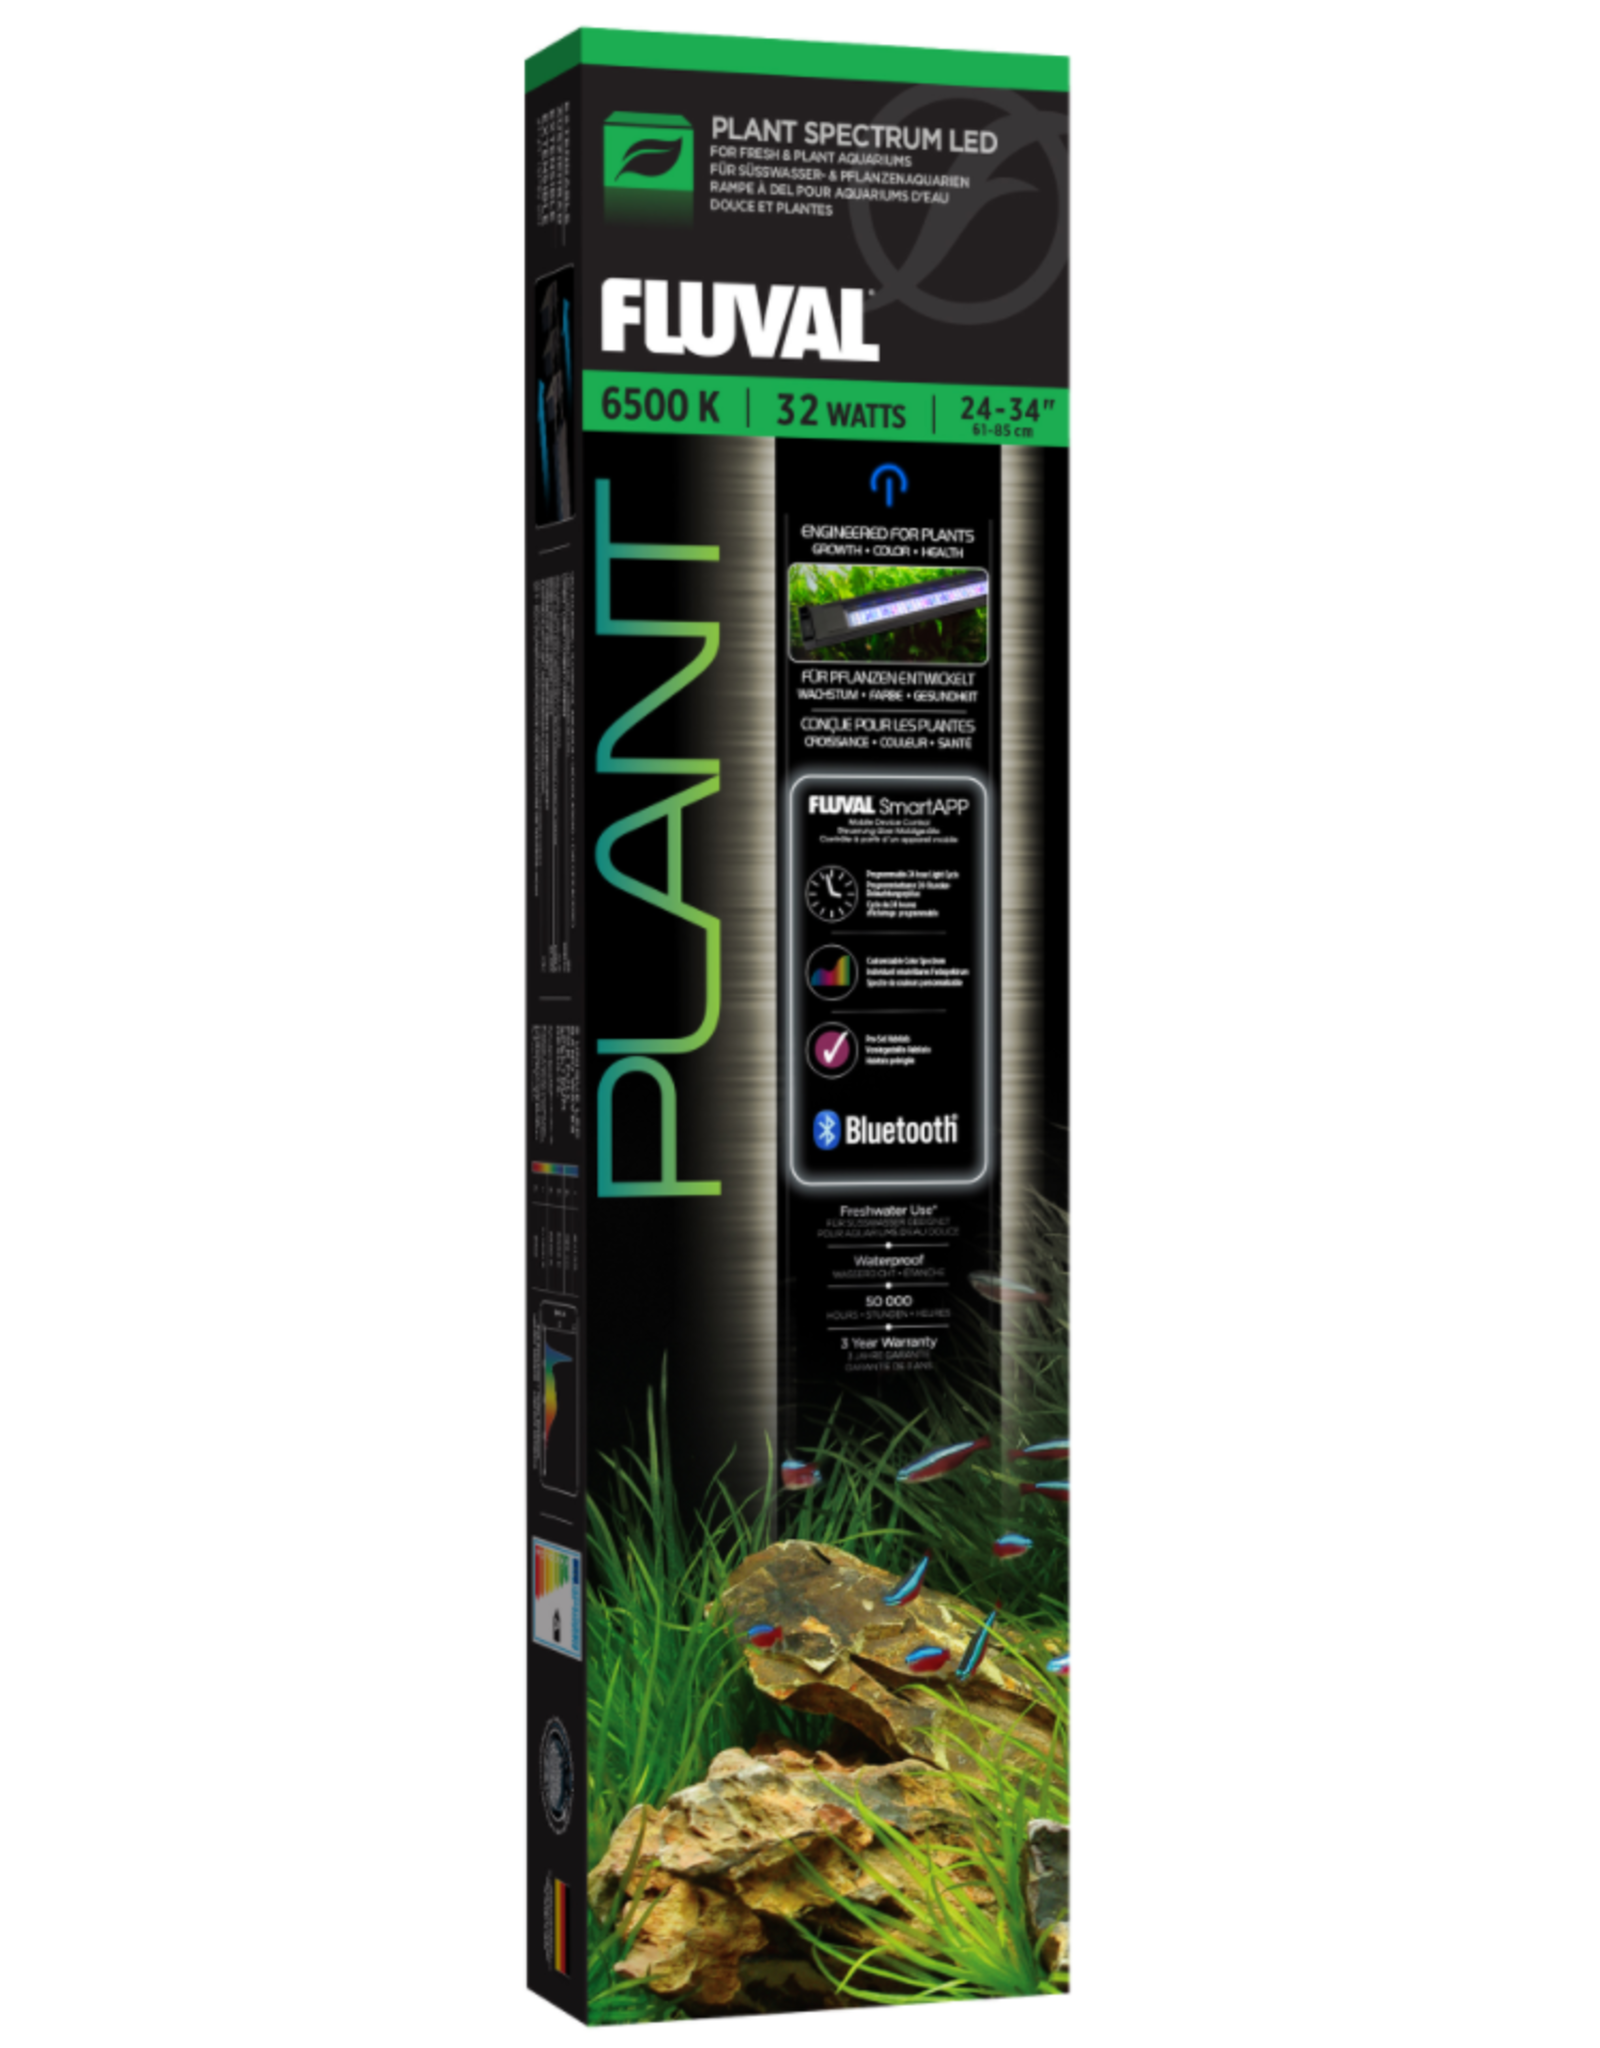 FLUVAL FLUVAL PLANT  SPECTRUM BLUETOOTH LED 32W 24-34"